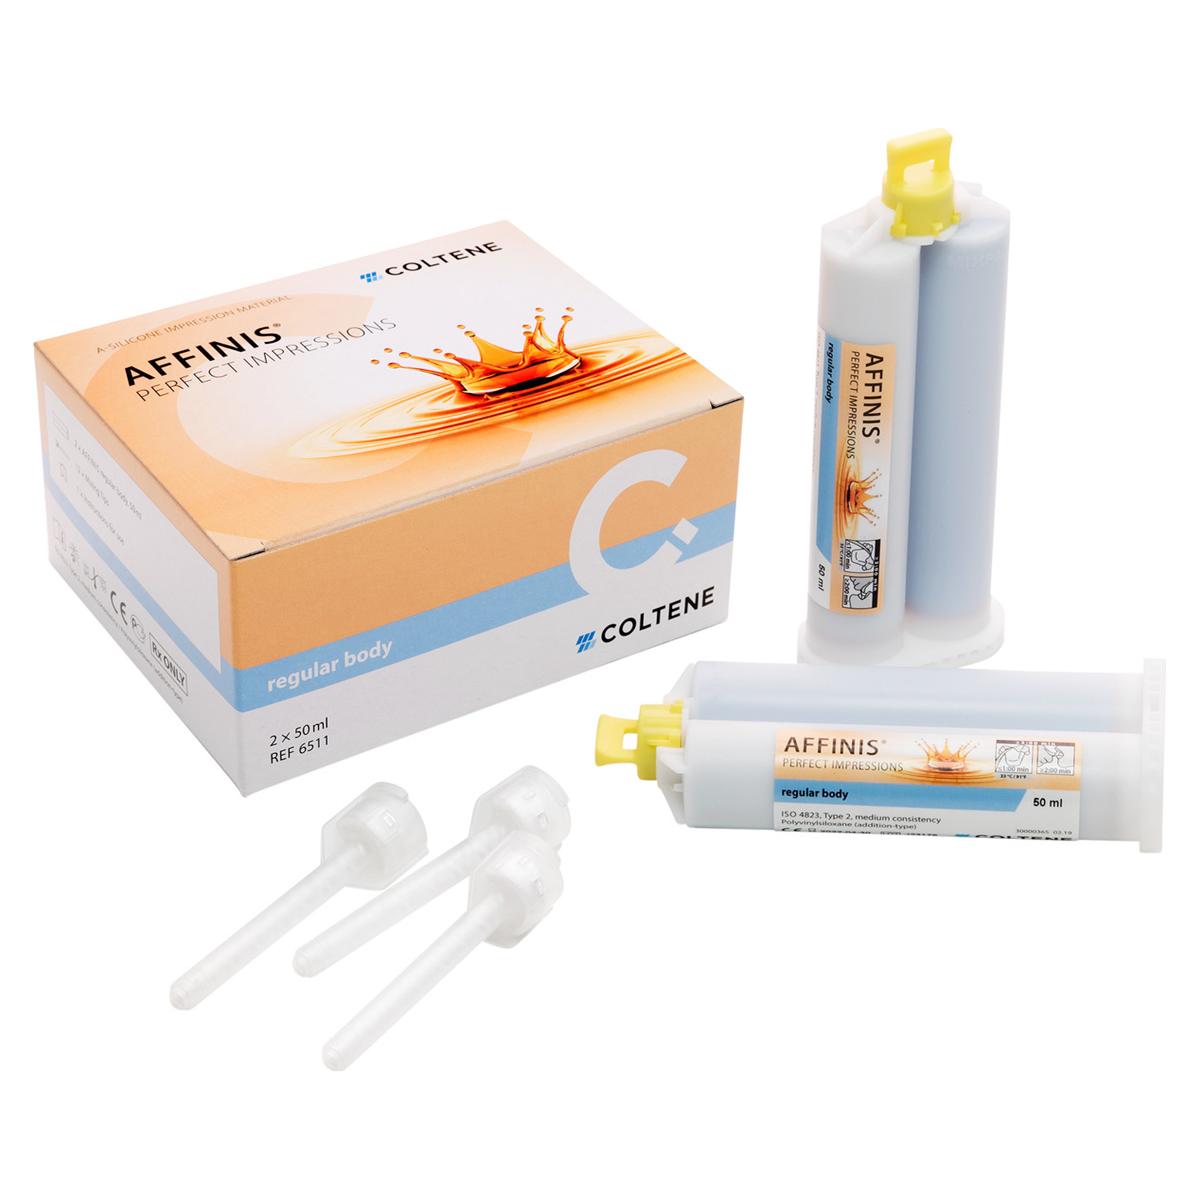 AFFINIS® regular body - Standardpackung - Kartuschen 2 x 50 ml